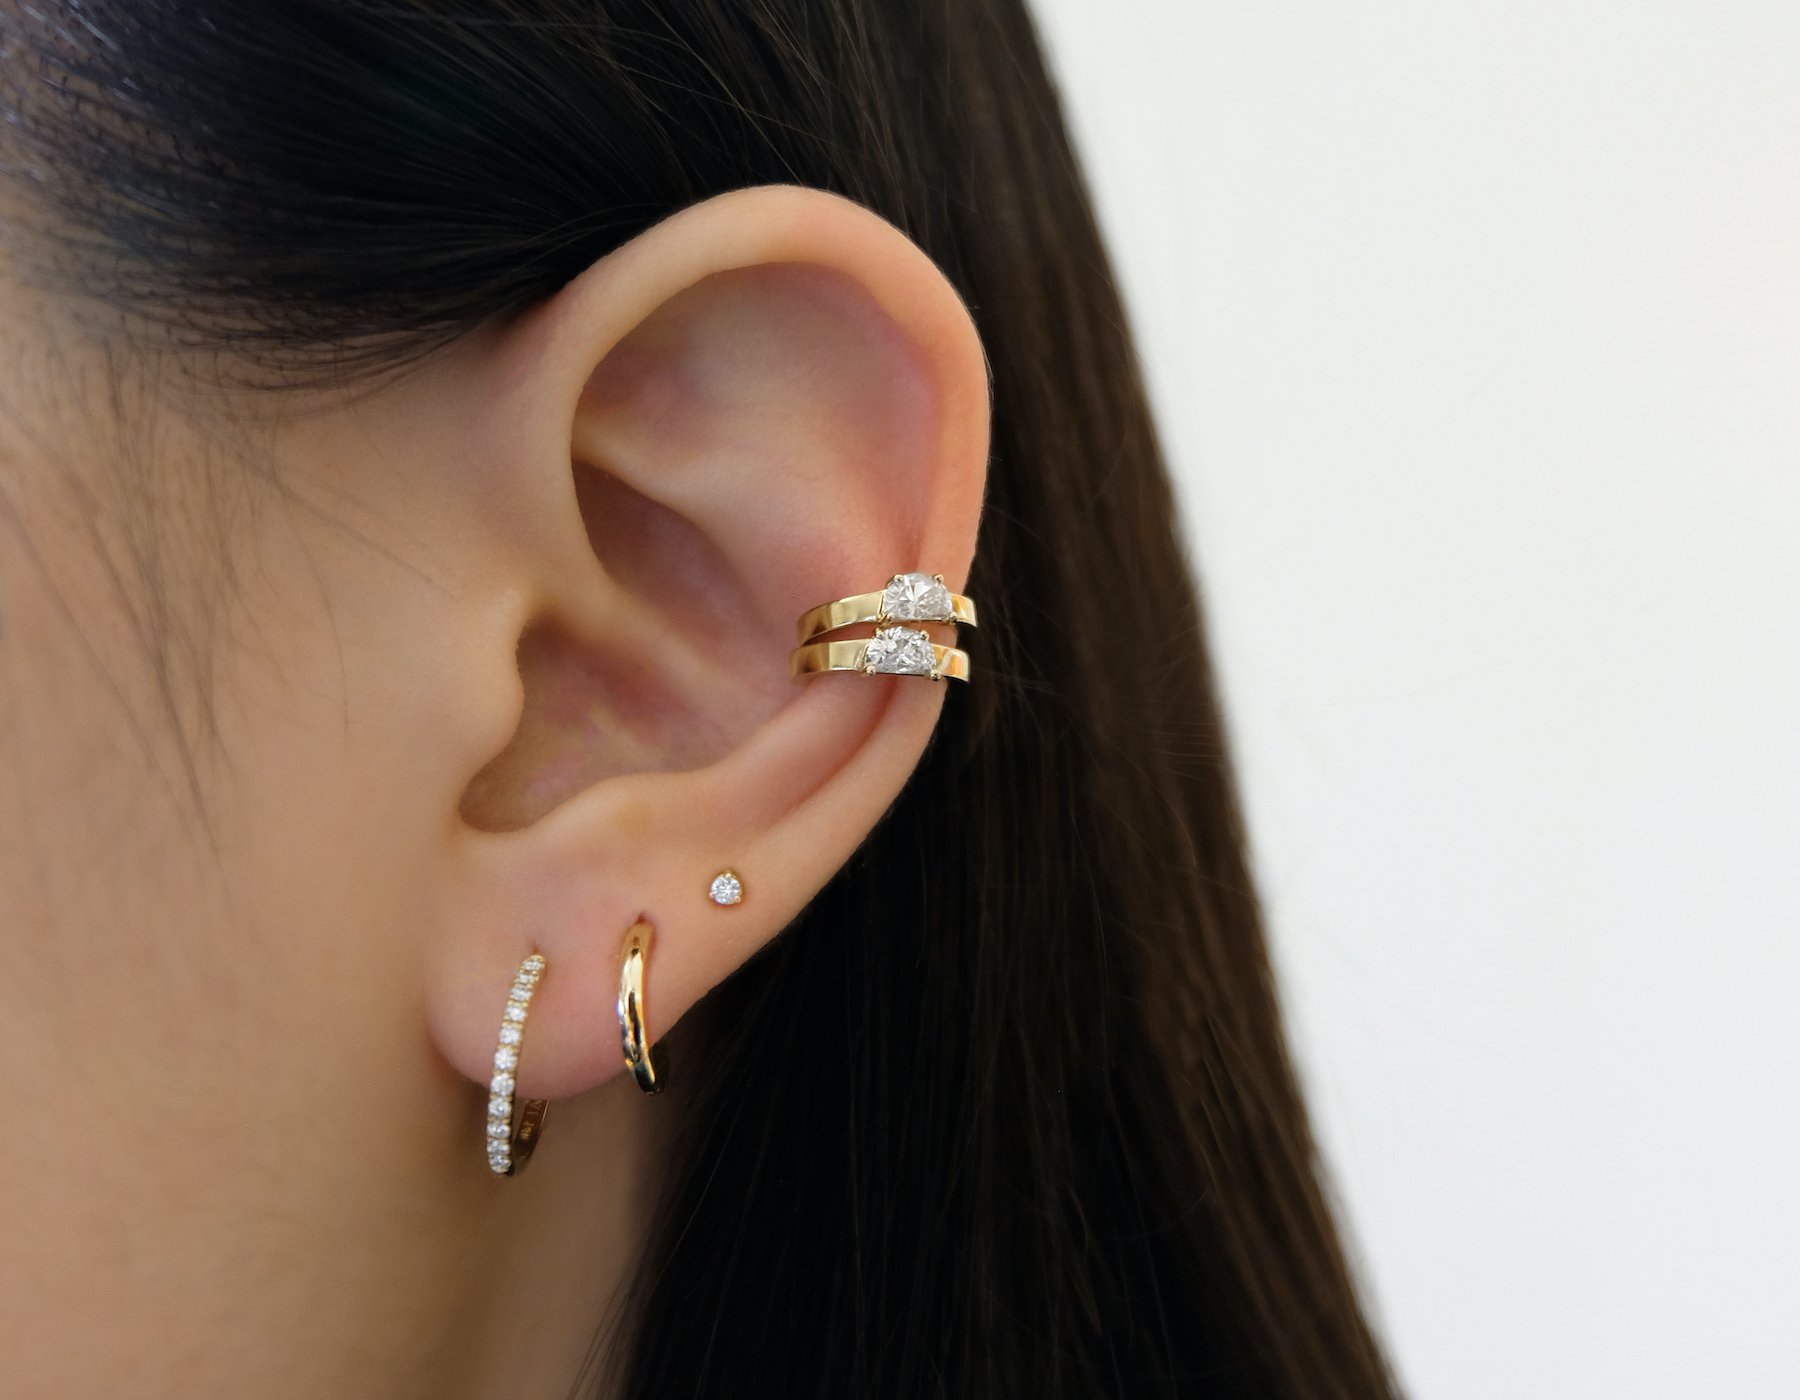 Jewellery Earrings Cuff & Wrap Earrings Natural SI Clarity G-H Color Single Diamond Cuff Earring Solid 14K Yellow Gold Handmade Minimalist One Piece Earring 